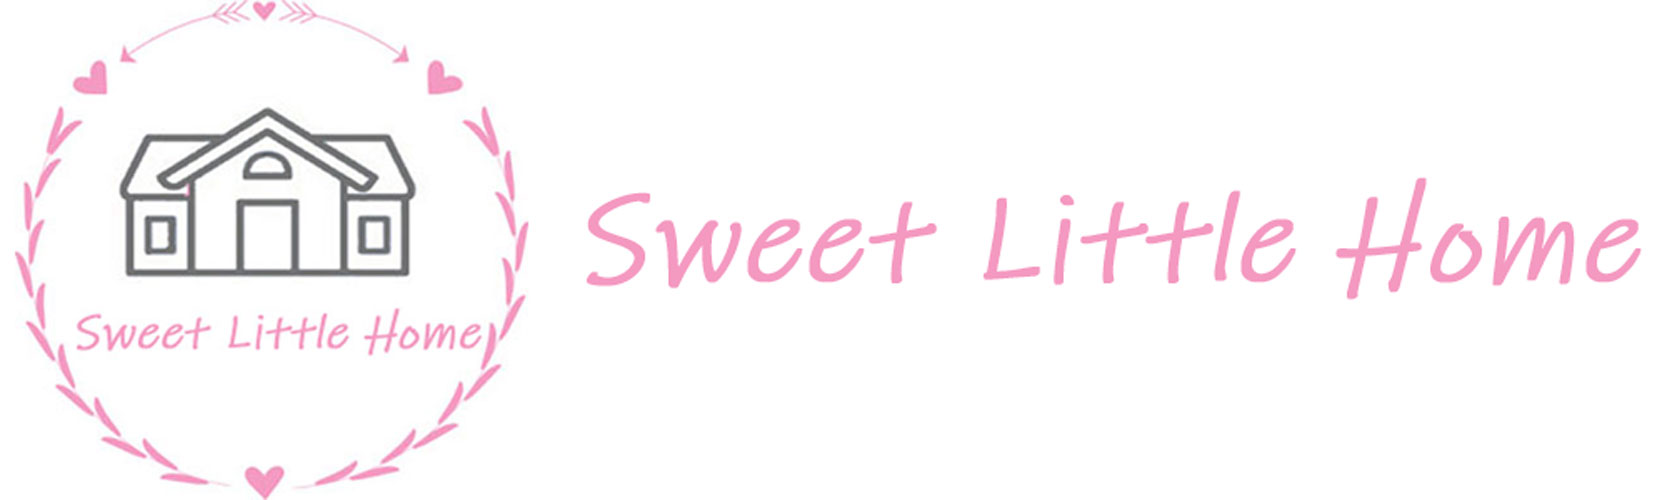 Sklep internetowy SweetLittleHome.pl